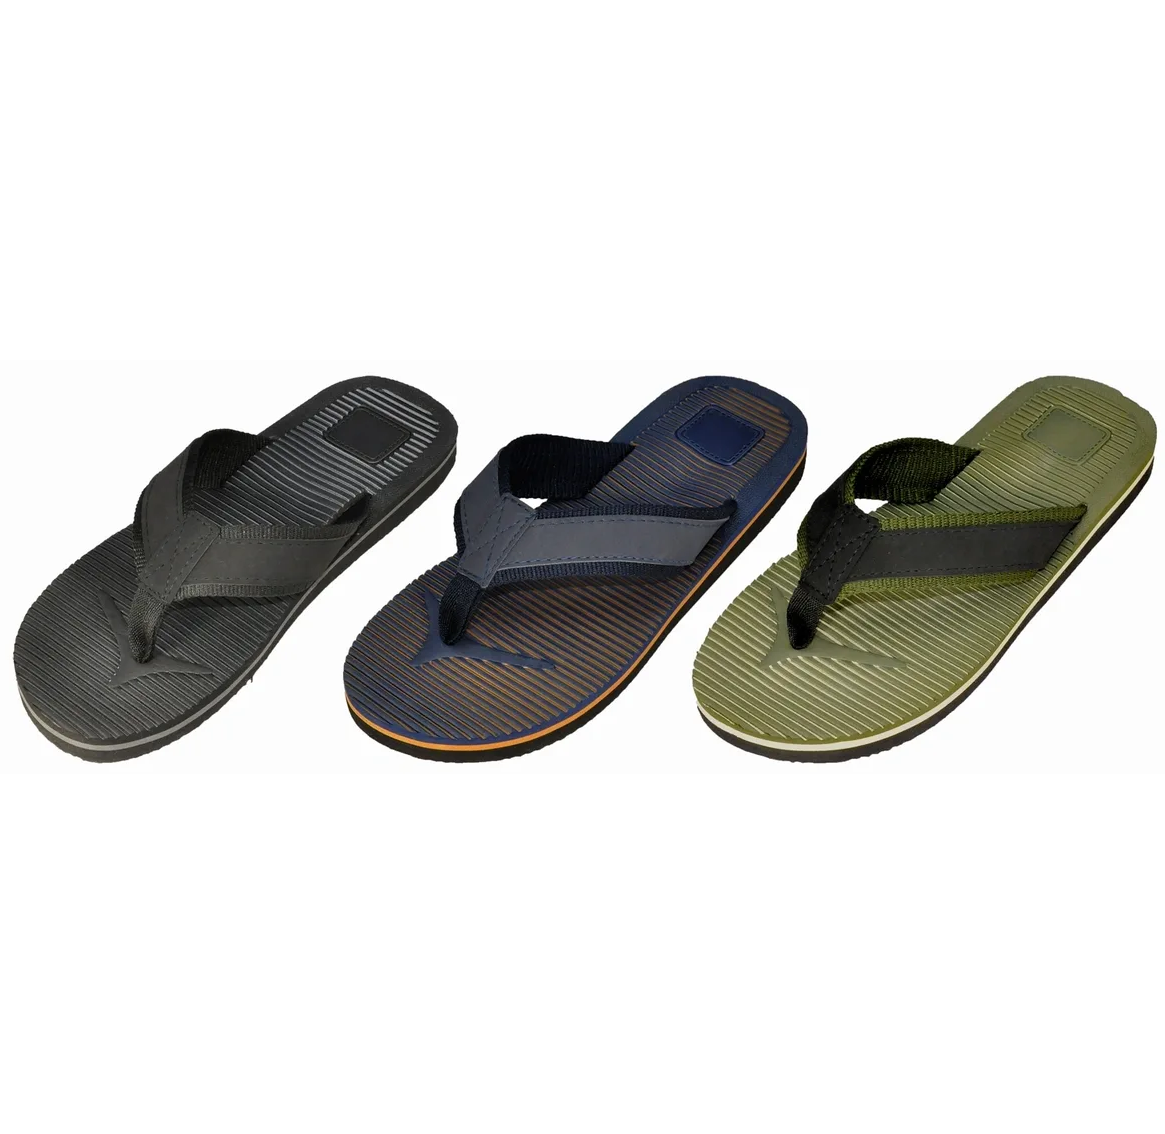 Wholesale Men's Slippers Gents Mix Assorted Colors Sizes Flip Flops Cecil NSU15